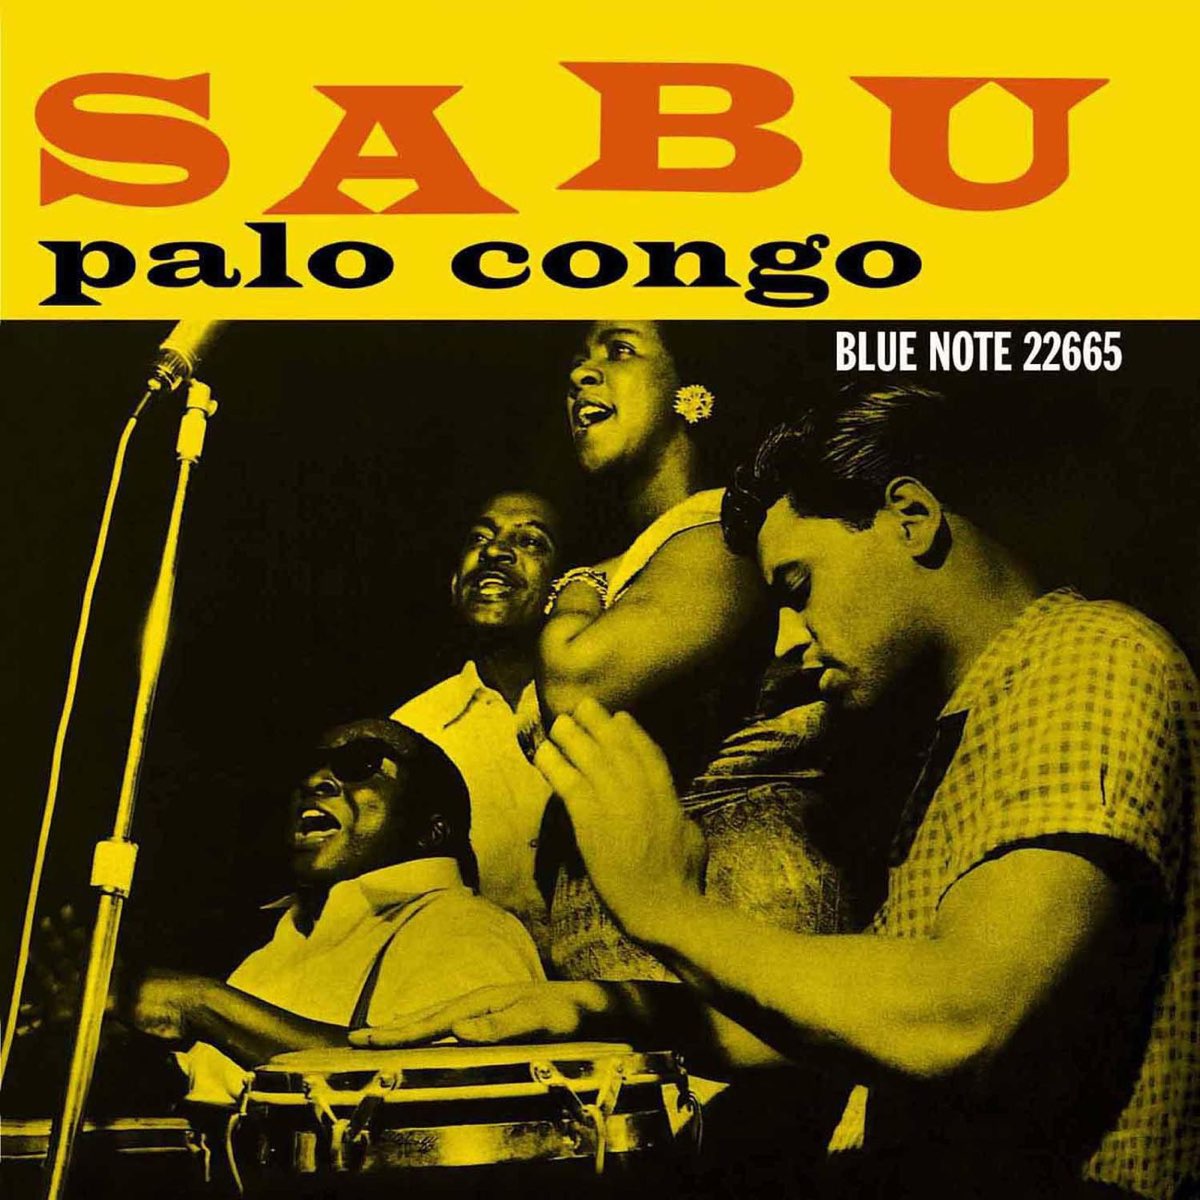 Palo Congo - Sabu Martinez cover